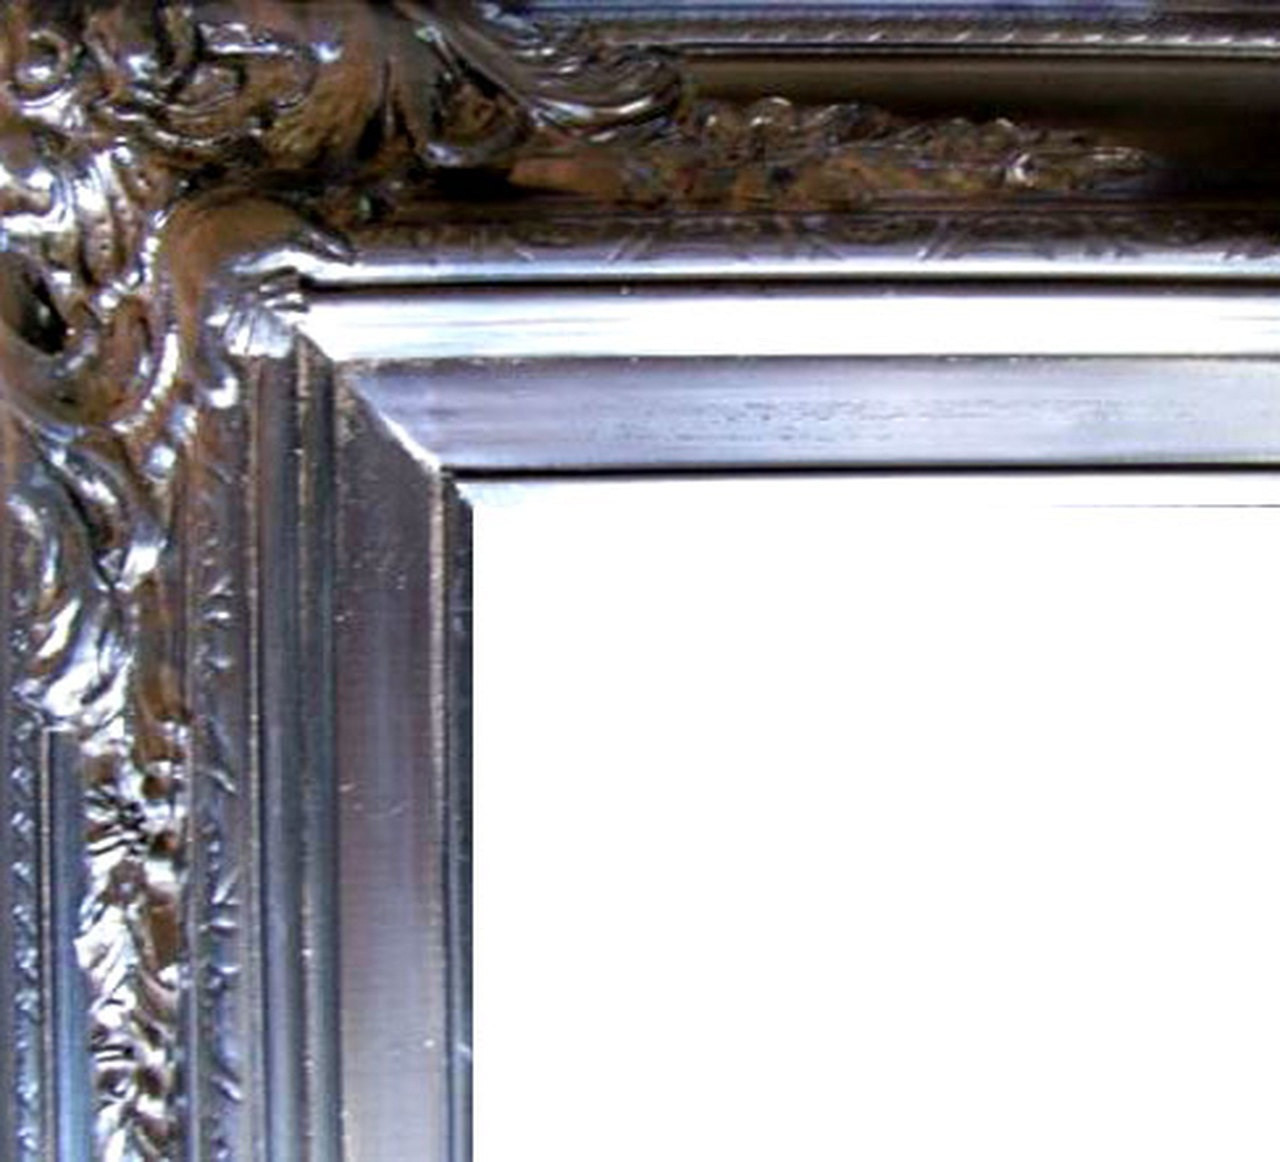 4" Ornate Wood Frames: 20X30*